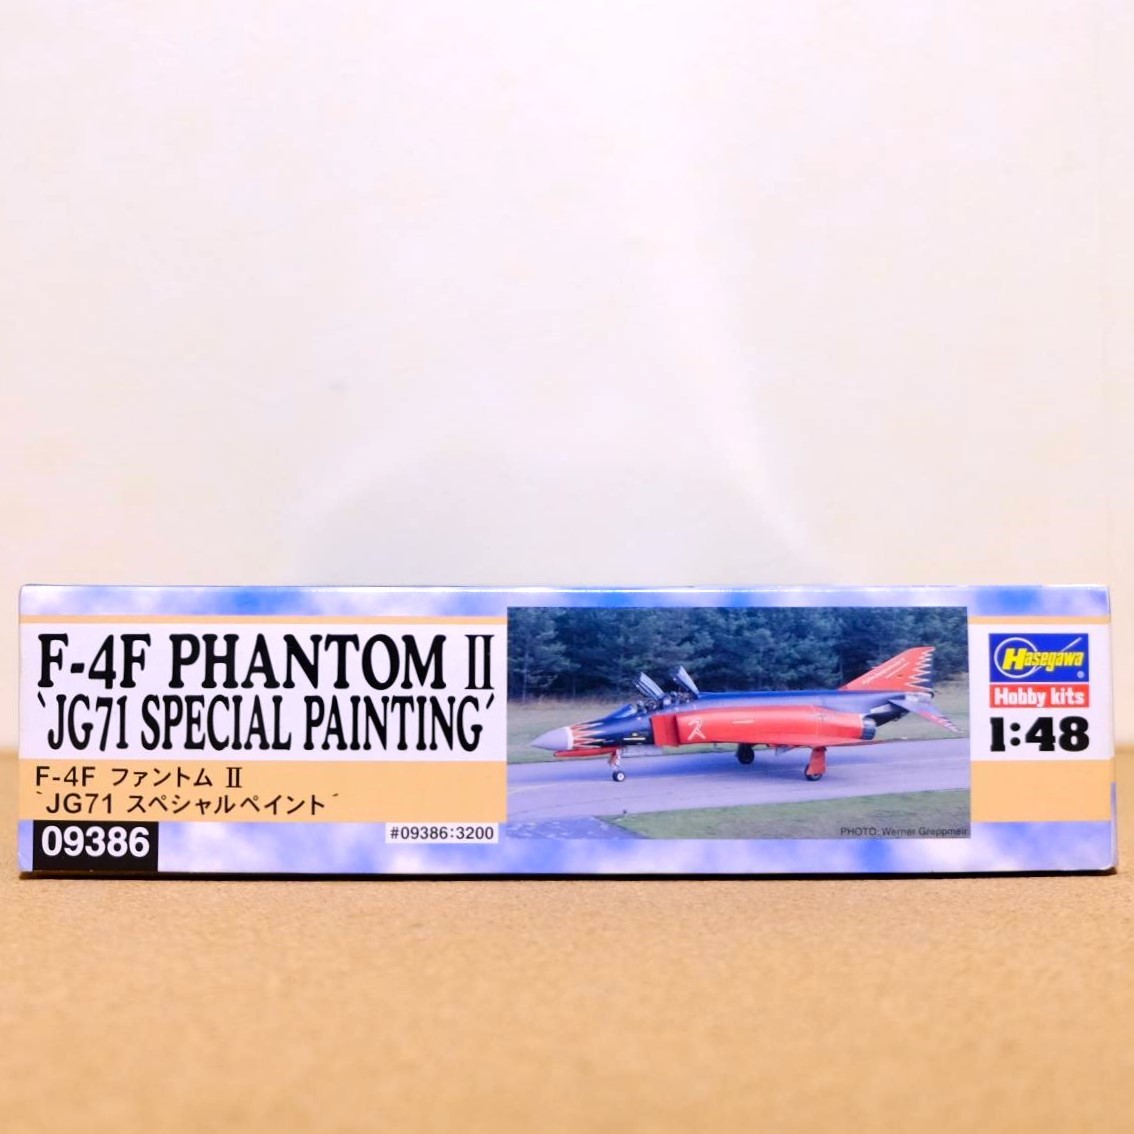 【Hasegawa】F-4 PHANTOMⅡJG71 SPECIAL PAINTING